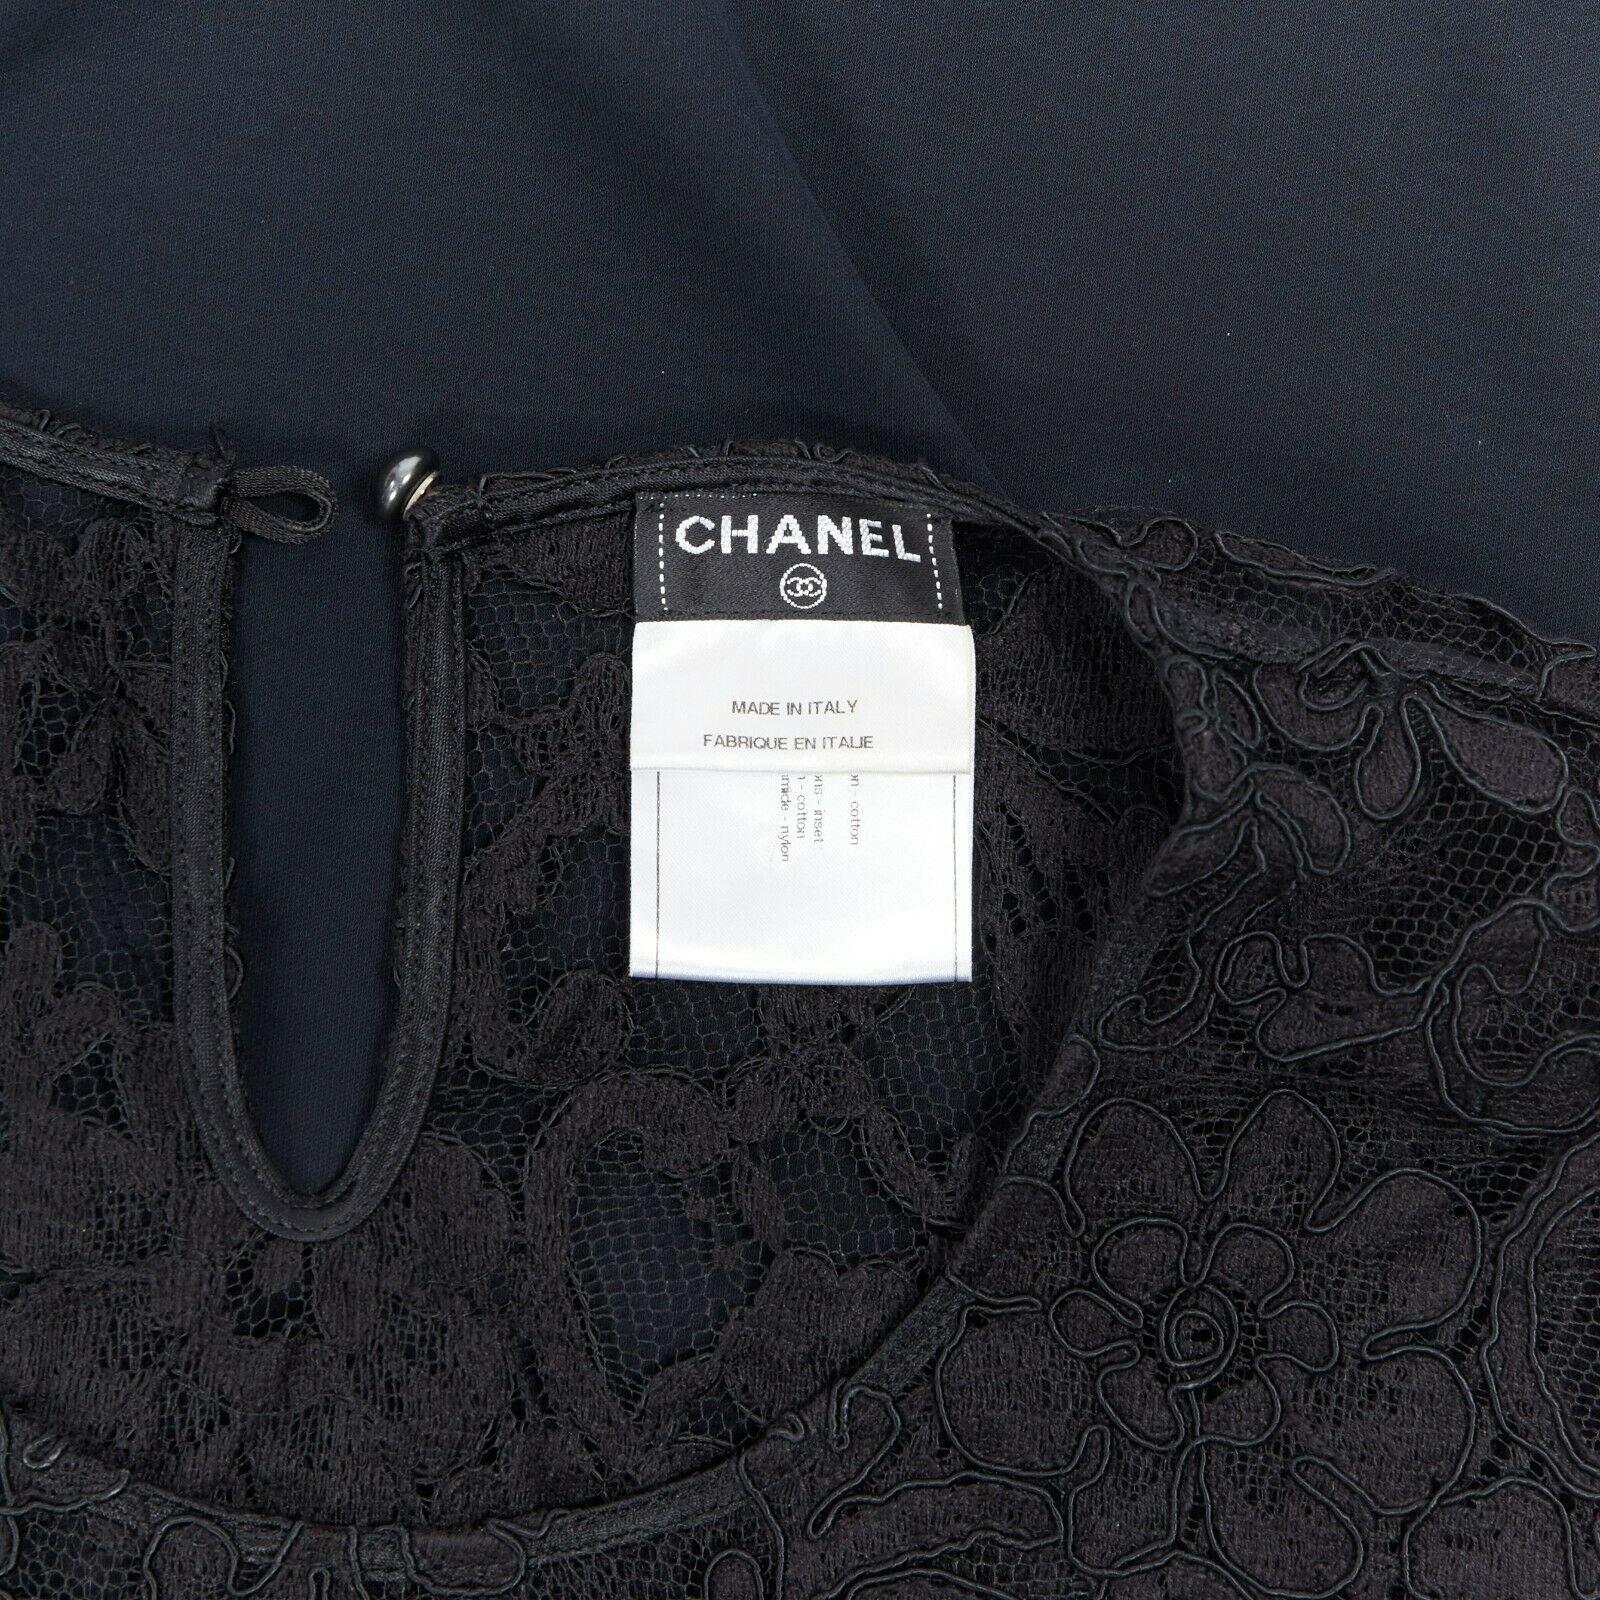 CHANEL navy blue 100% cotton illusion neckline black lace sleeveless top FR36 2